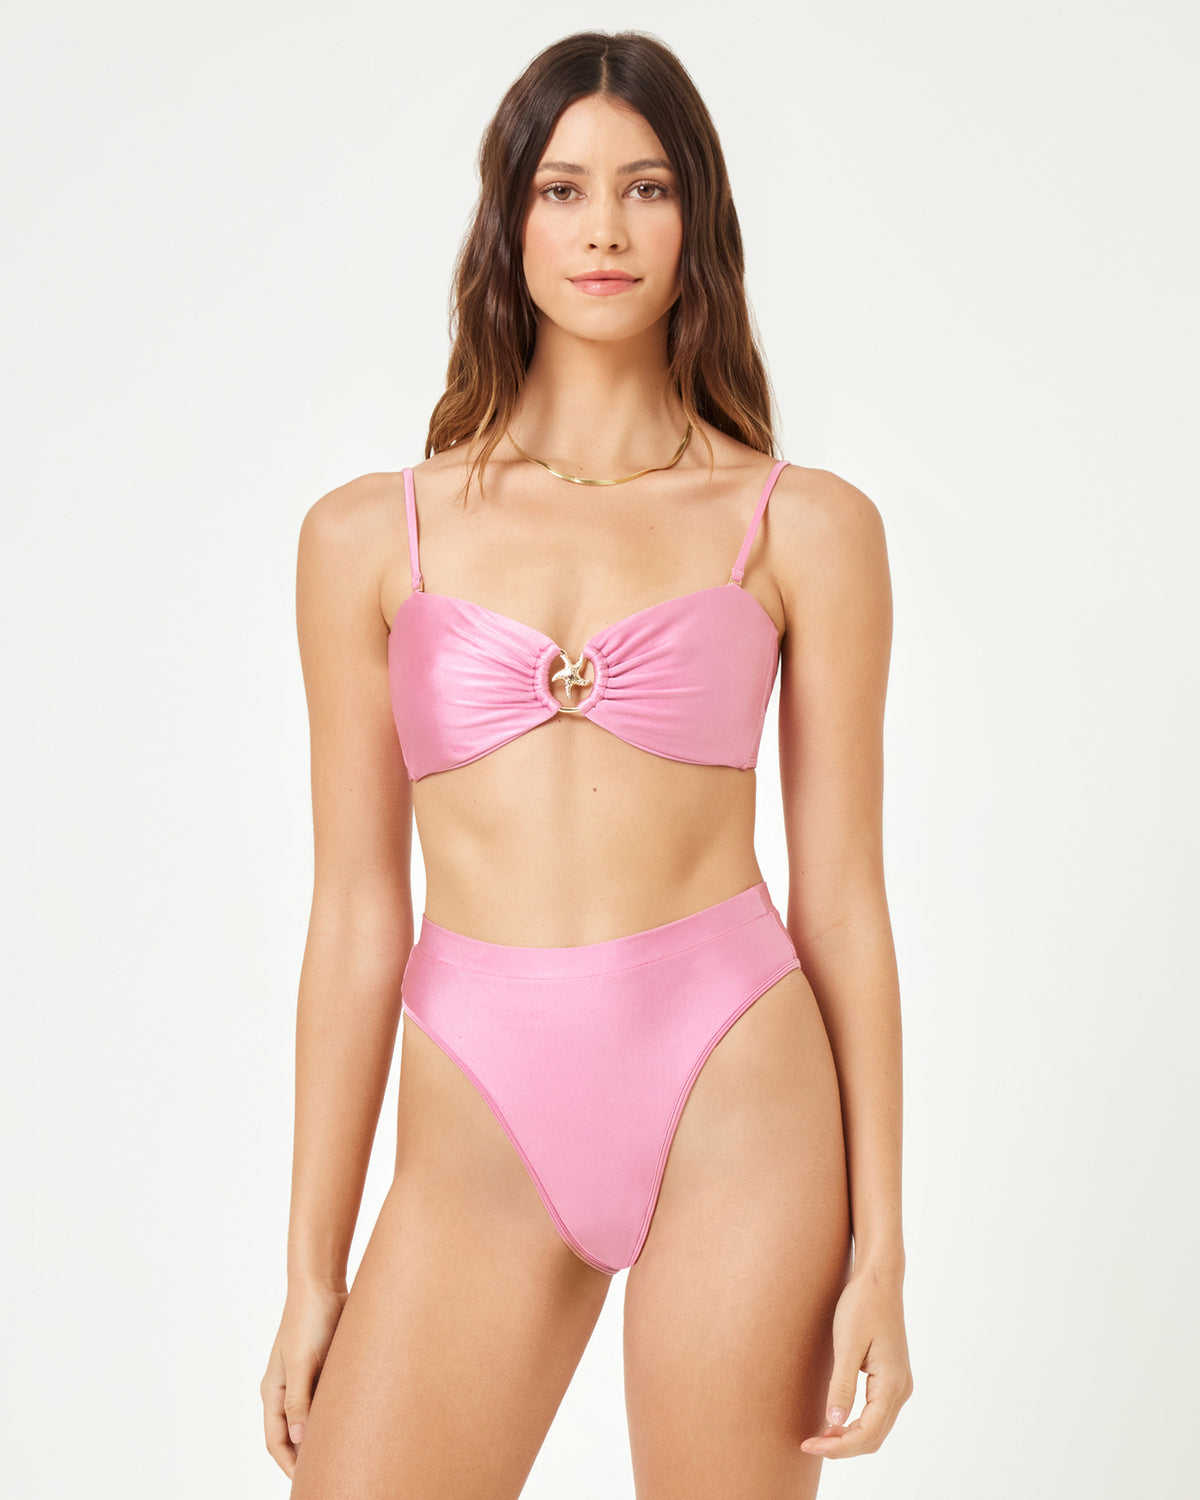 LSPACE X Anthropologie Jasper Bikini Top - Pink Lady Pink Lady | Model: Kristen (size: S)